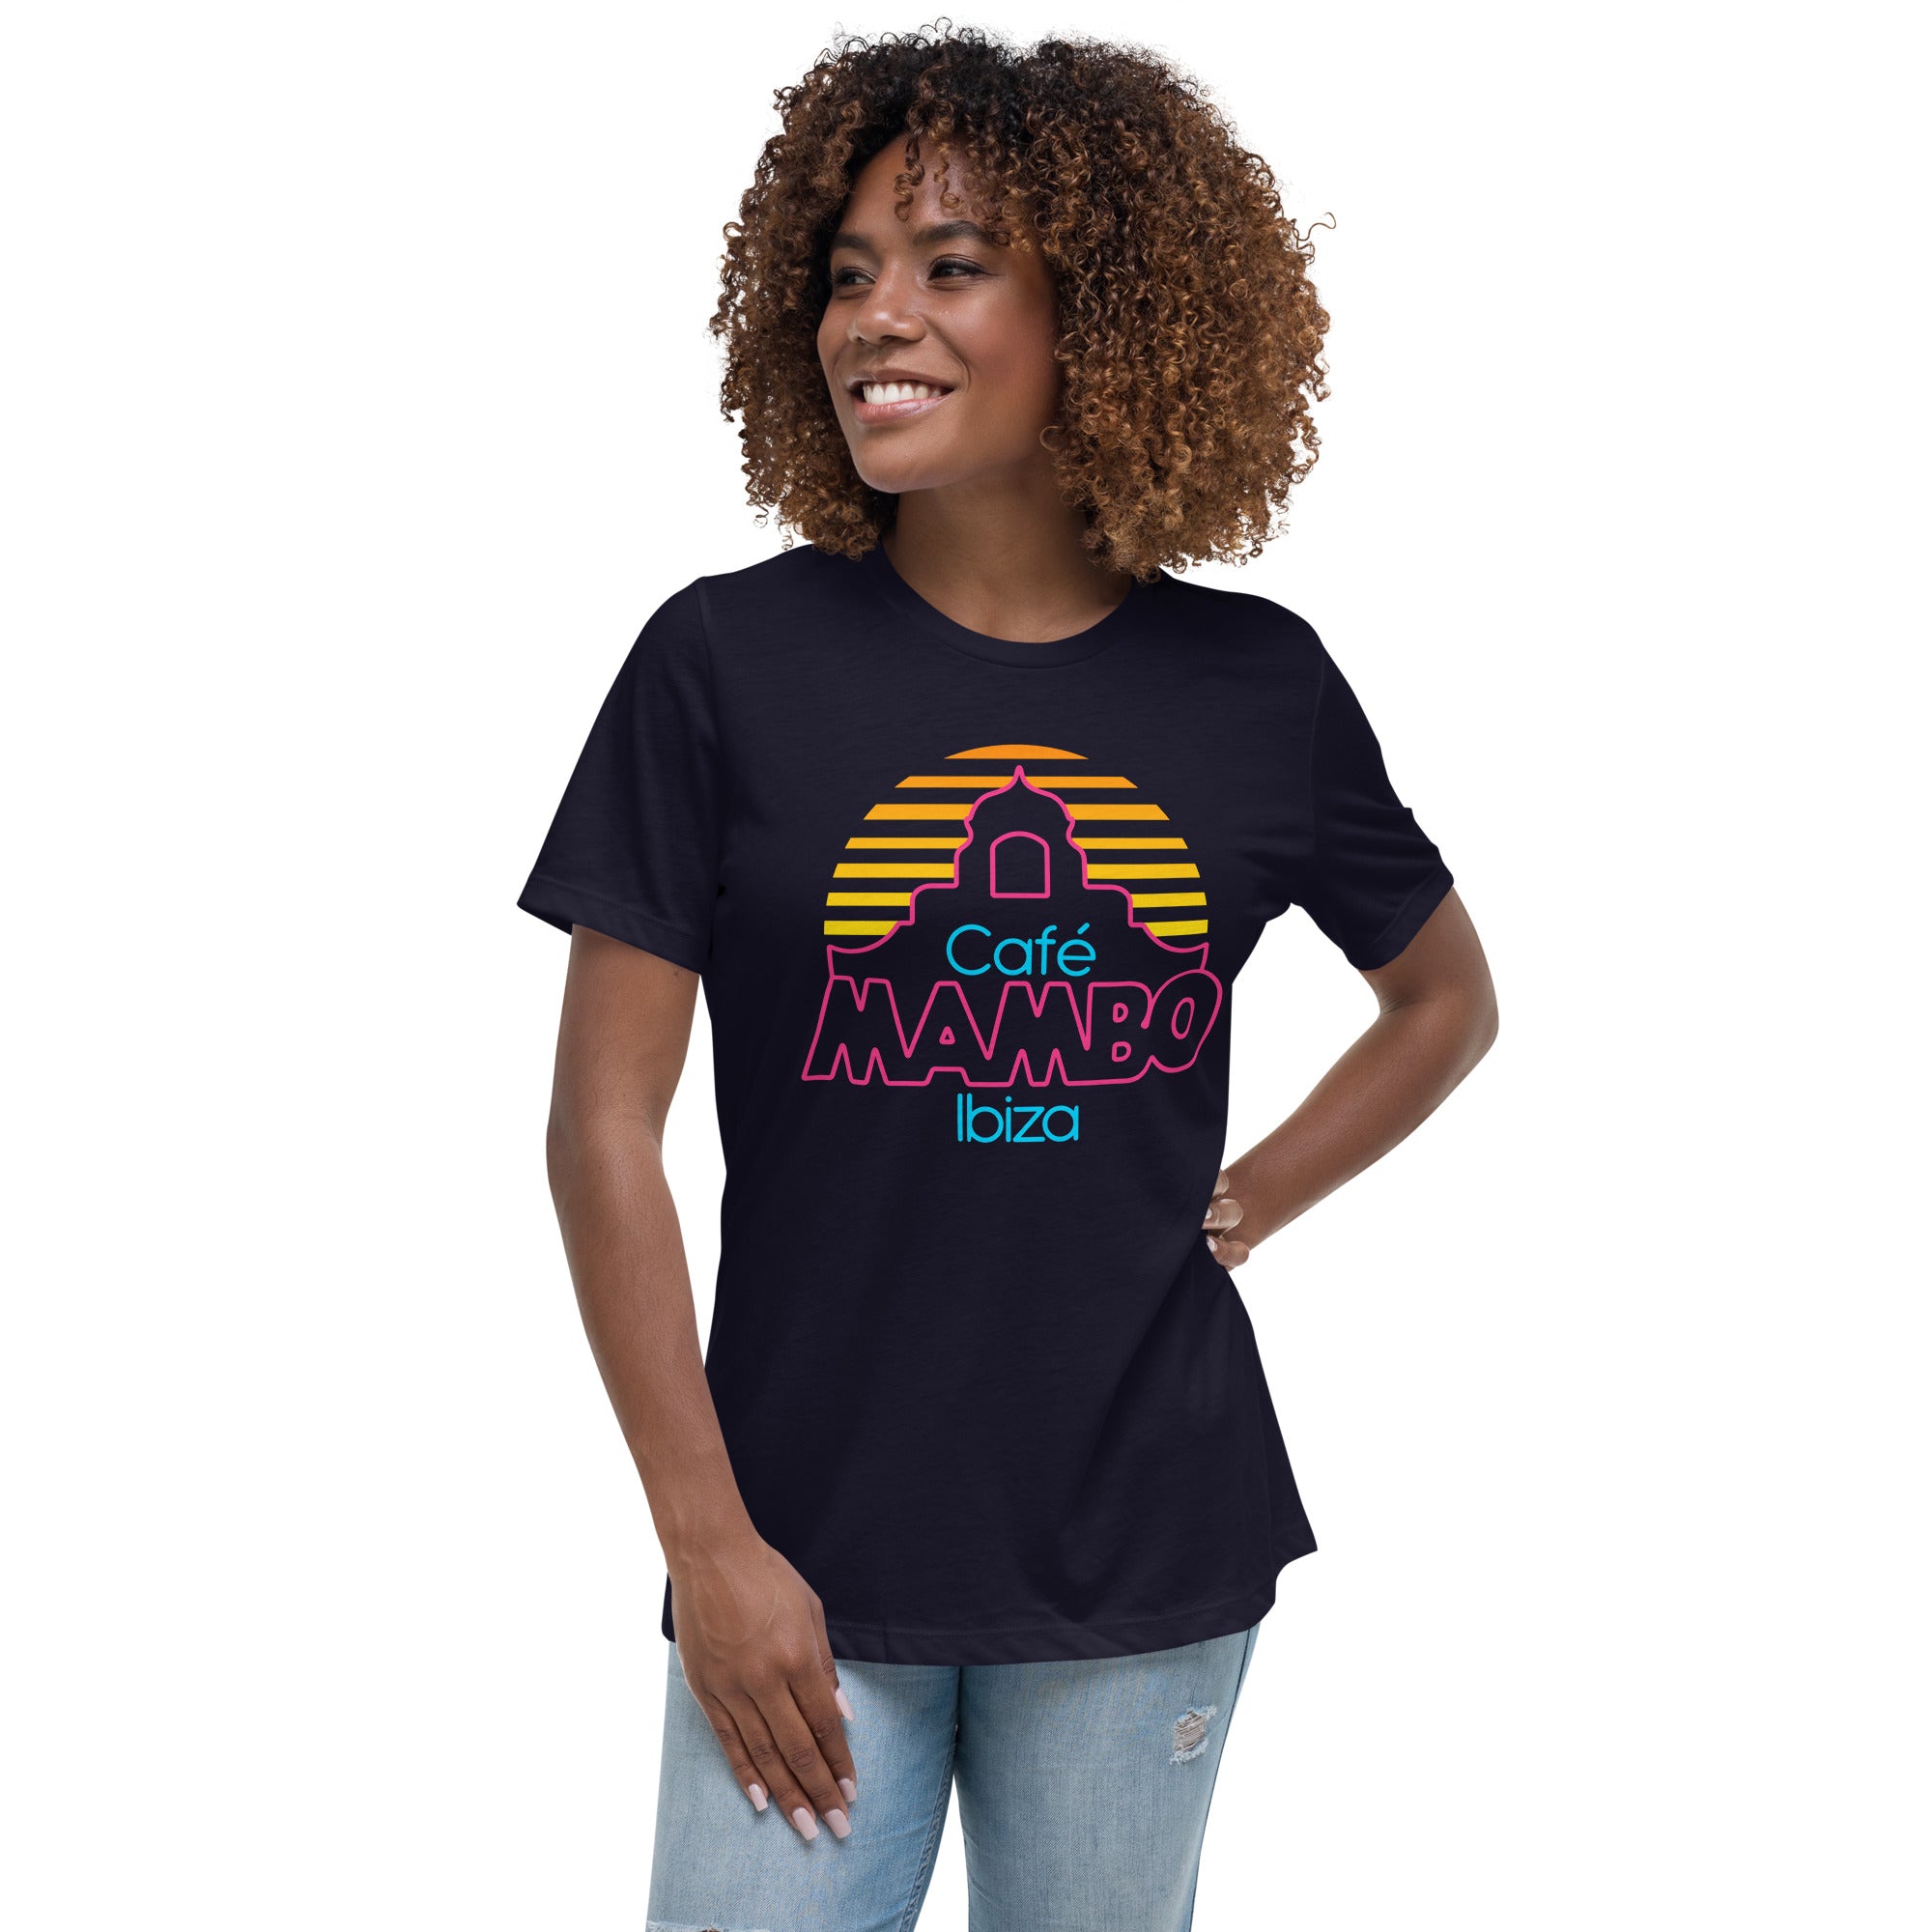 Cafe Mambo Ibiza Logo Women's Black T-shirt NEW